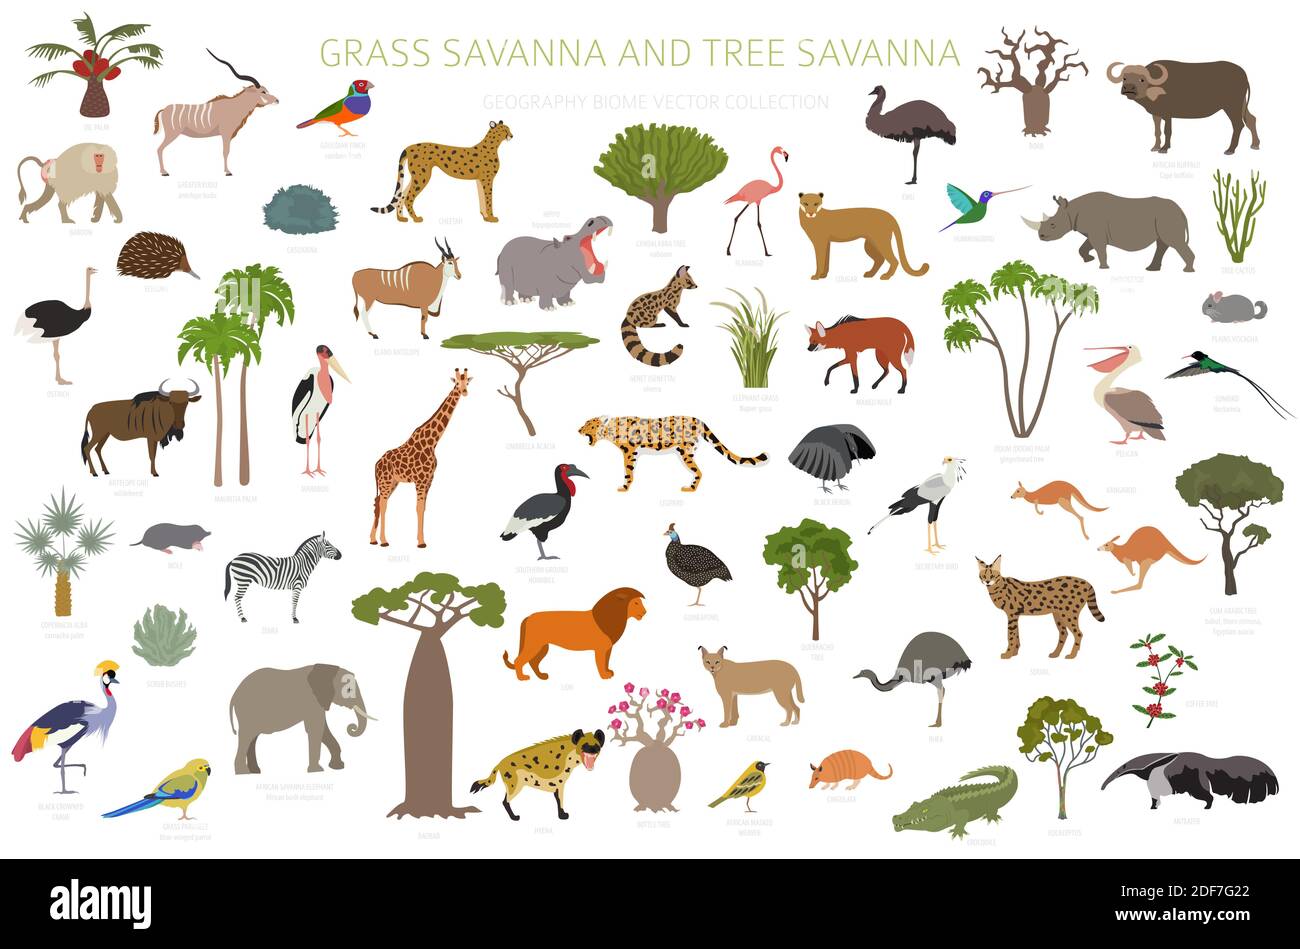 Tree savanna and grass savanna biome, natural region infographic. Woodland and grassland savannah, prarie, pampa. Animals, birds and vegetations ecosy Stock Vector